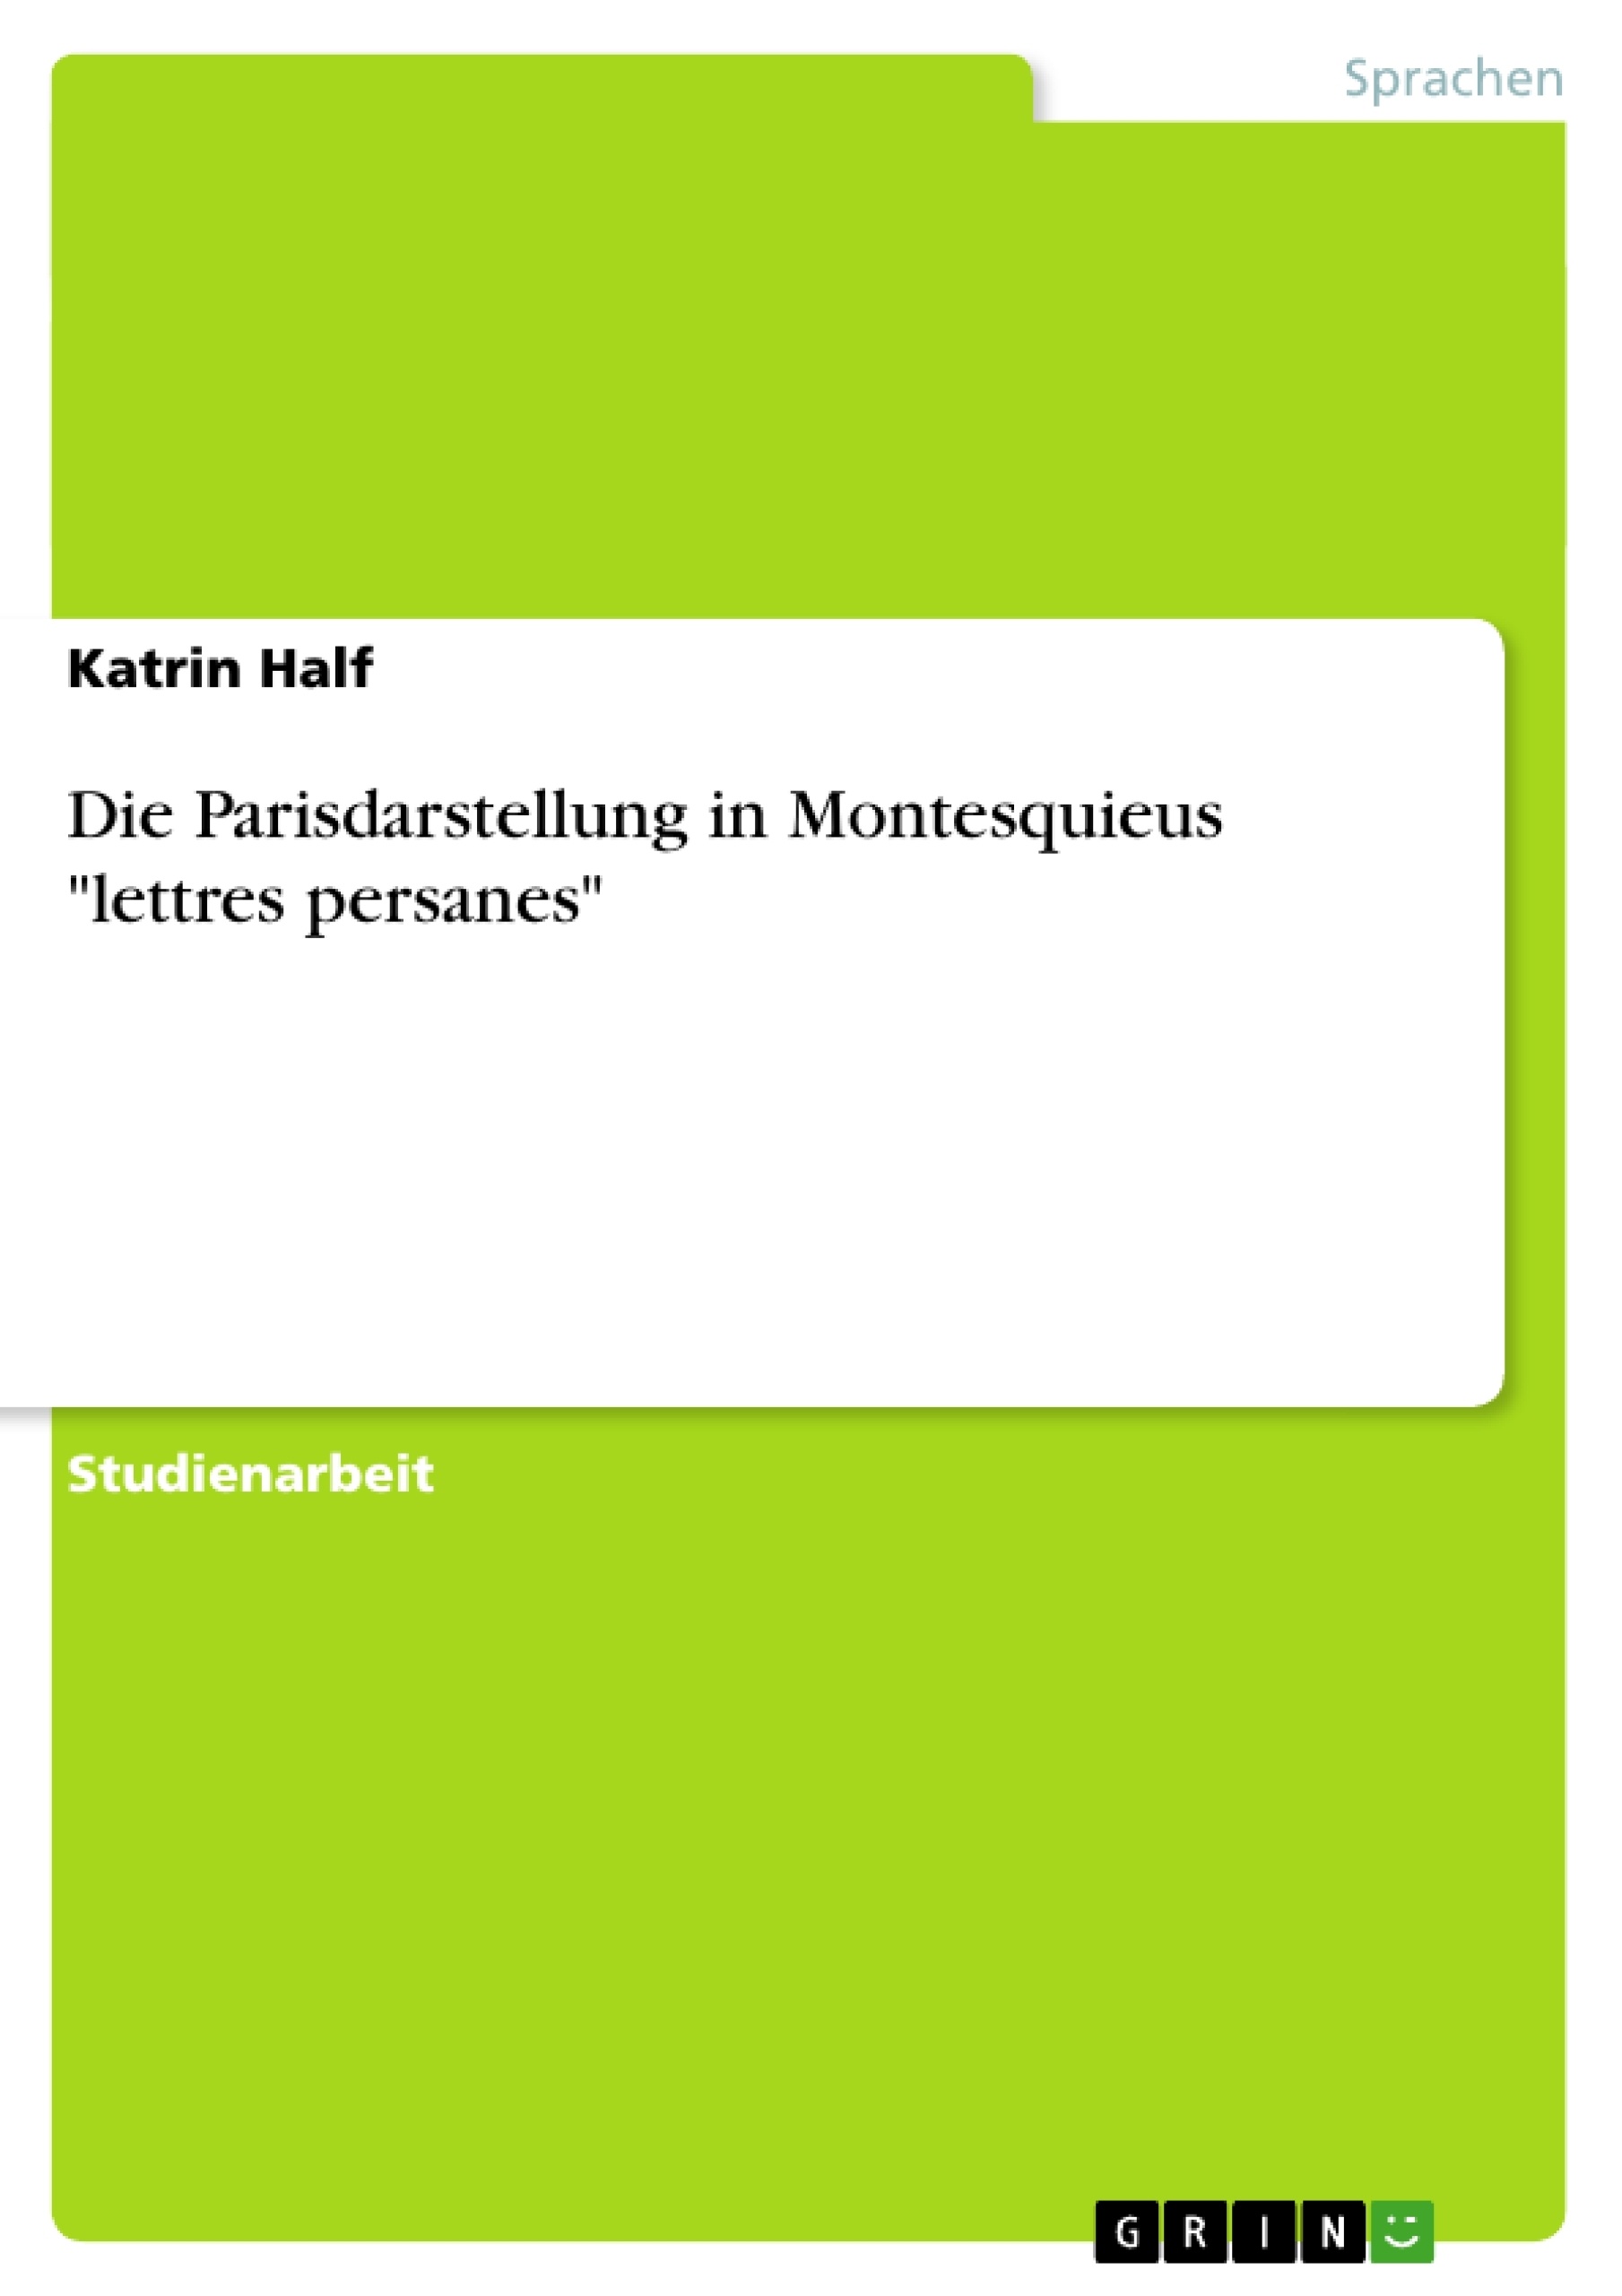 Titel: Die Parisdarstellung in Montesquieus "lettres persanes"